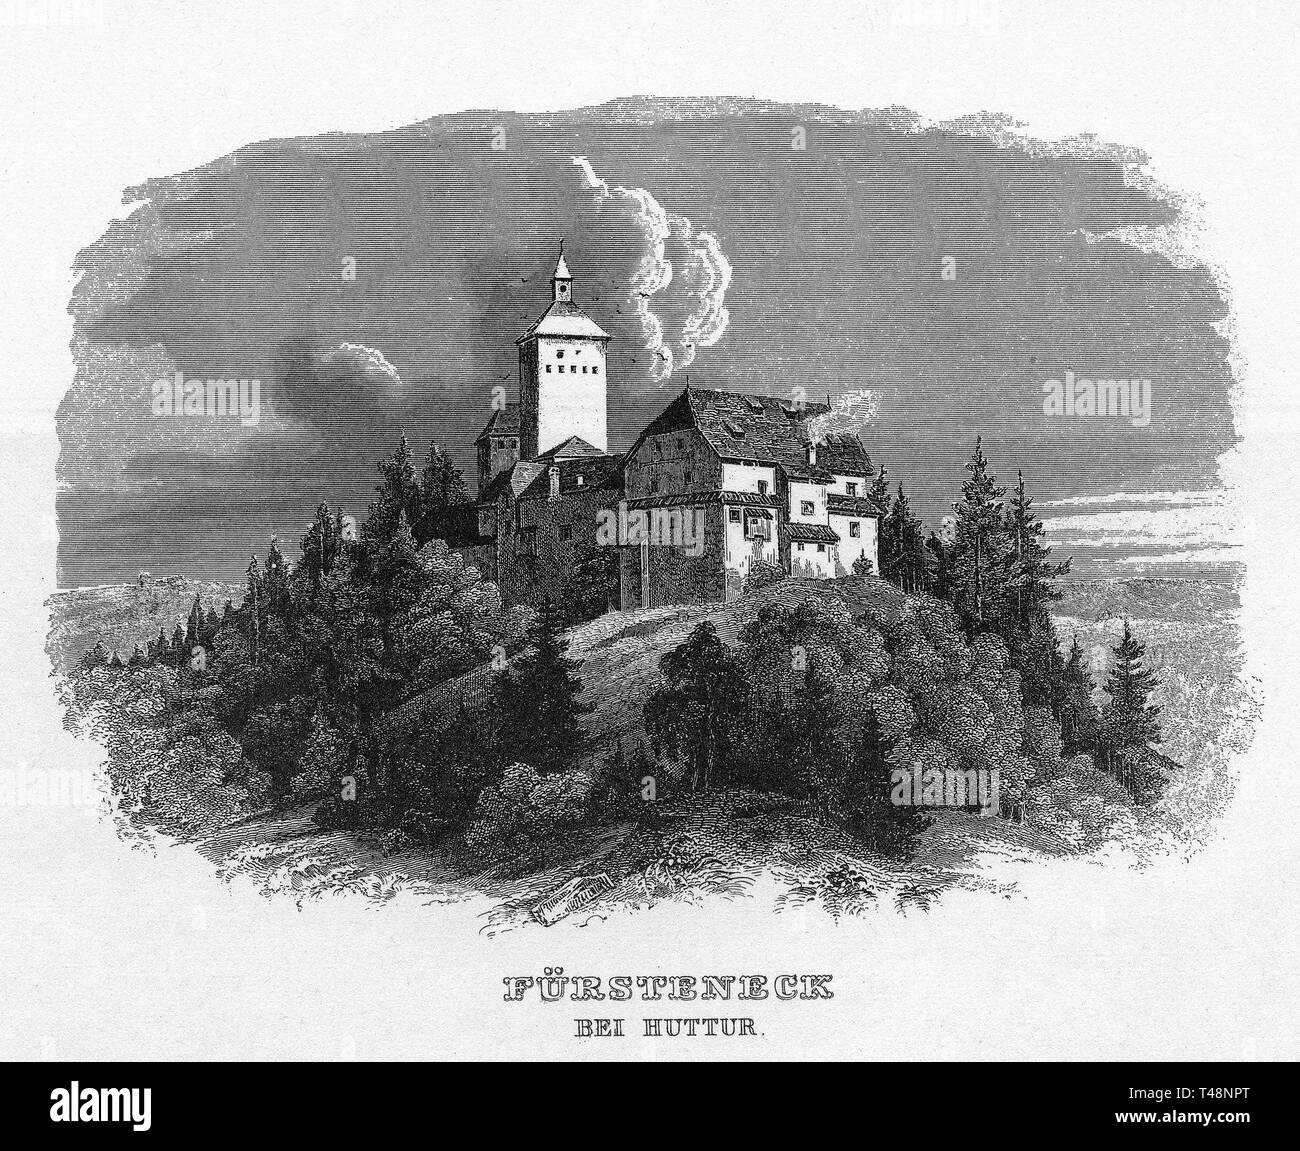 Fursteneck Castle, Perlesreut, drawing by Seeberger, steel engraving by J. Poppel, 1840-1854, Kingdom of Bavaria, Germany Stock Photo